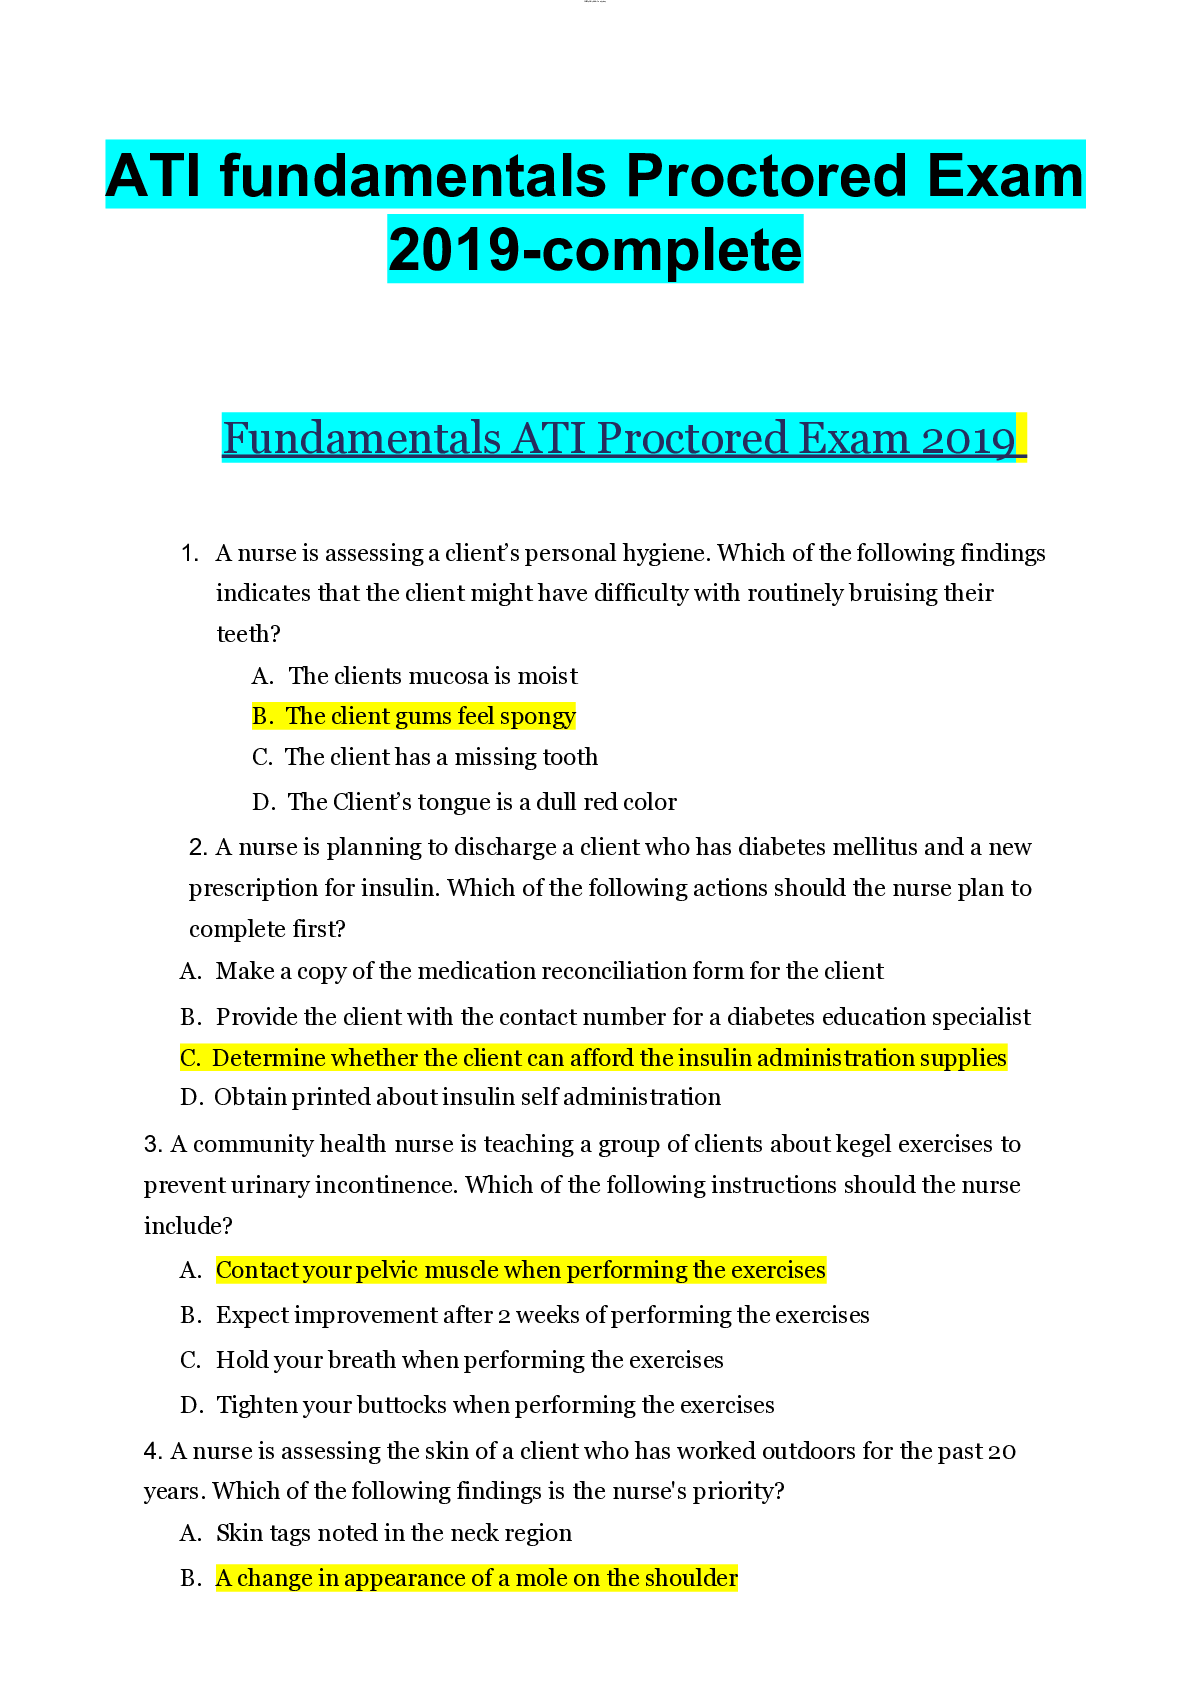 ATI fundamentals Proctored Exam Browsegrades